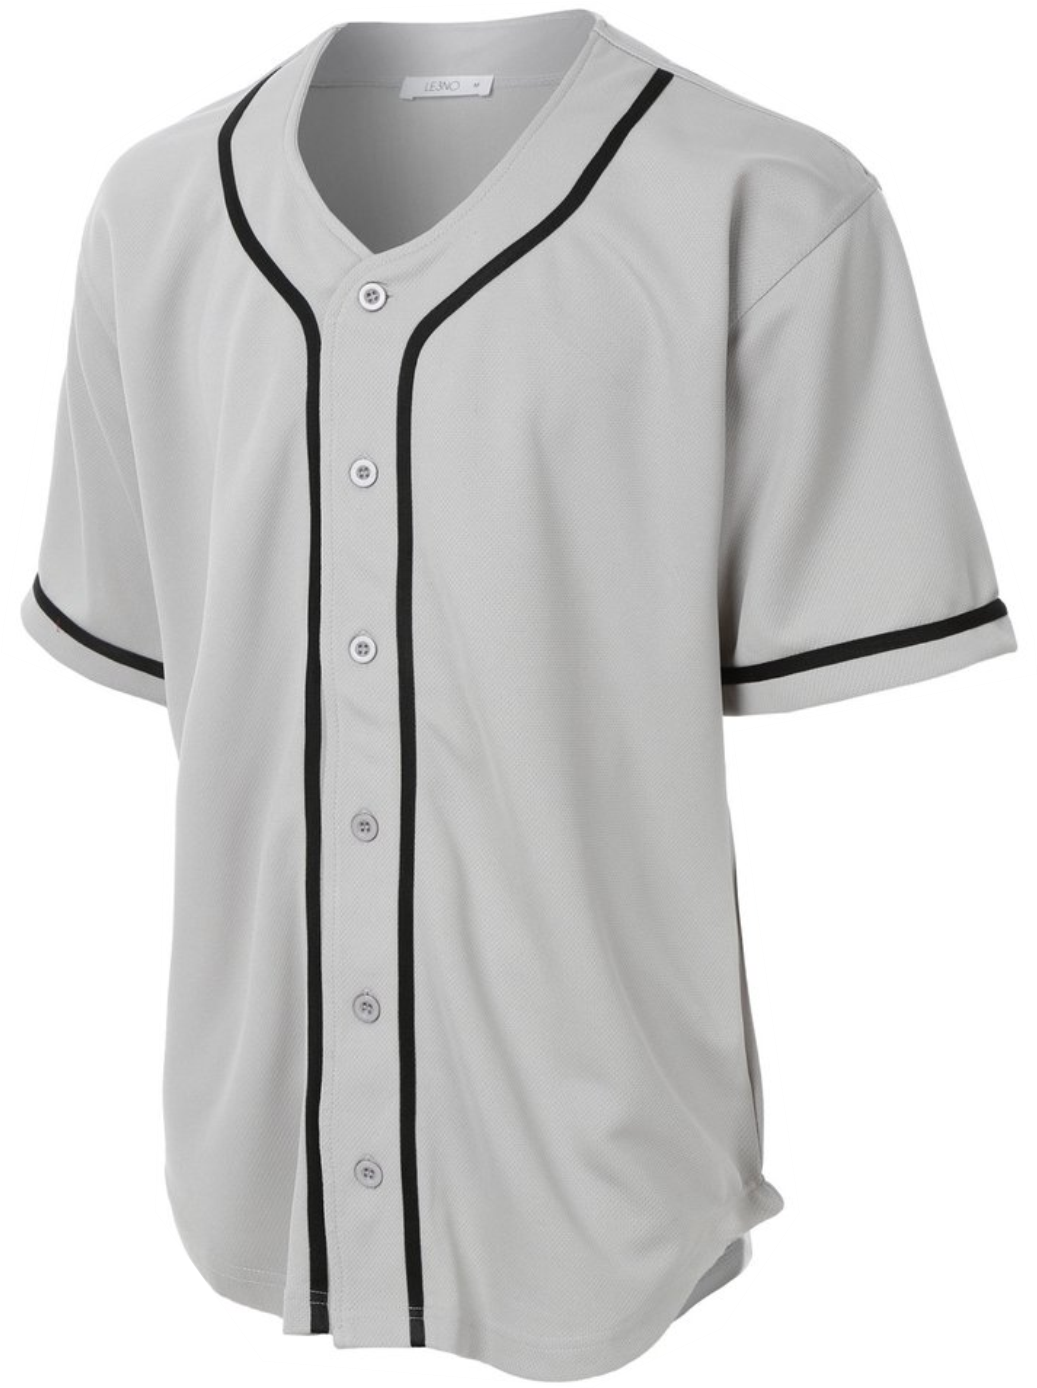 Blank Baseball Jersey Design PNG image